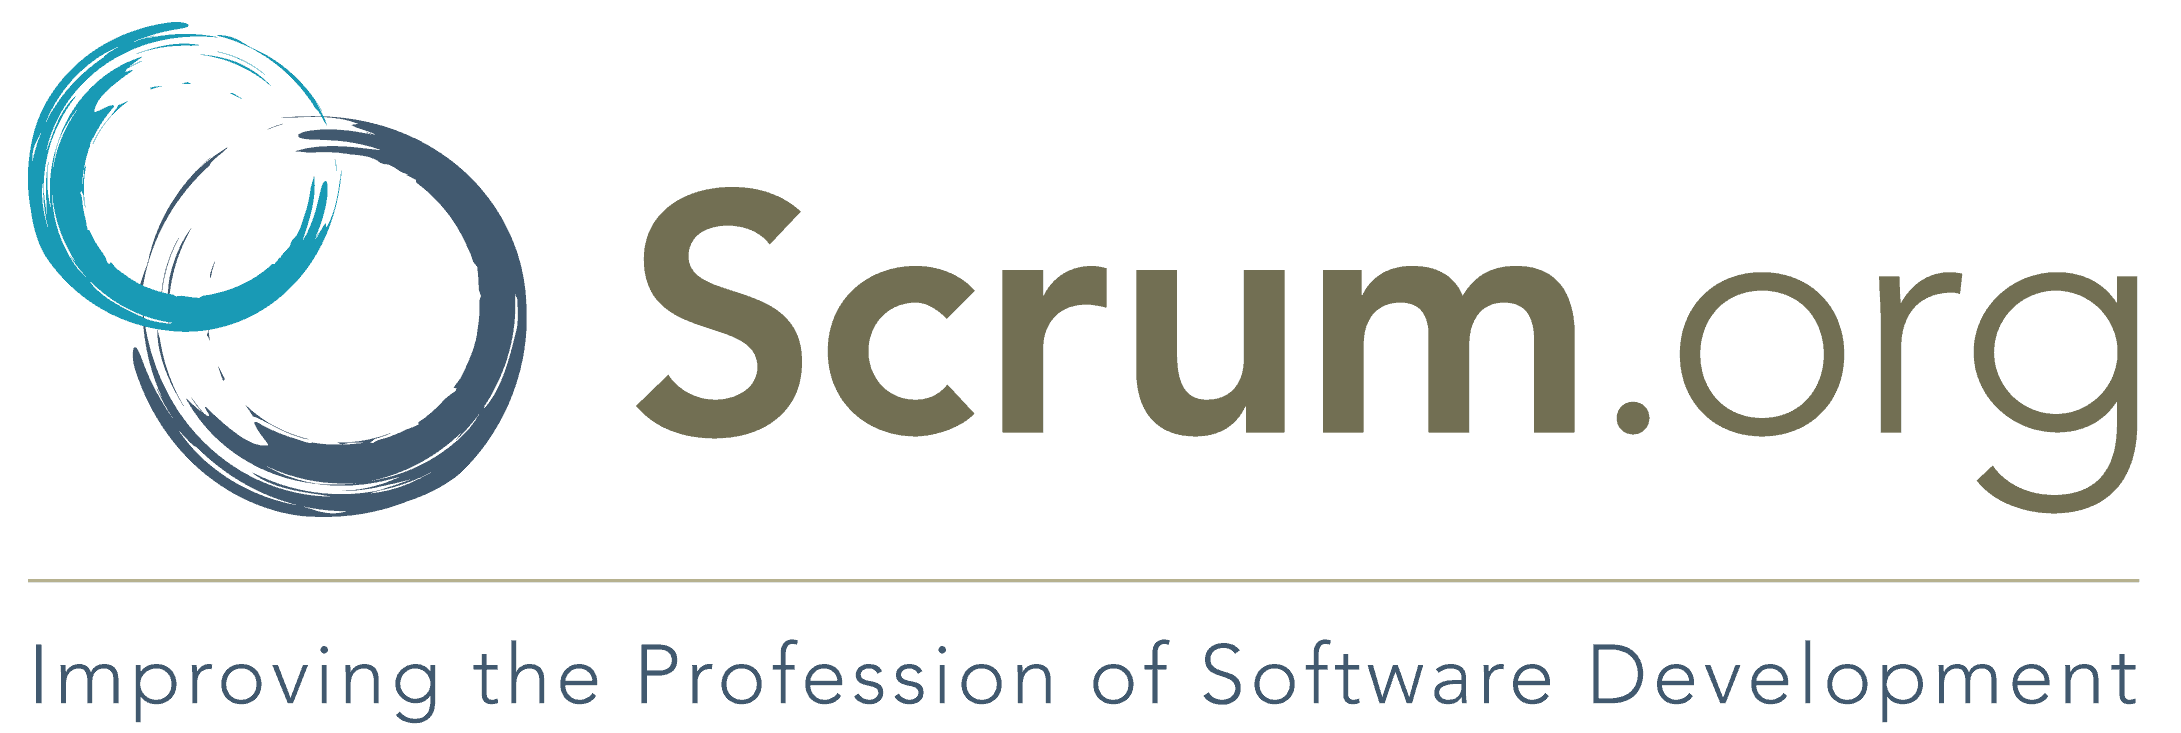 Scrum.org Logo